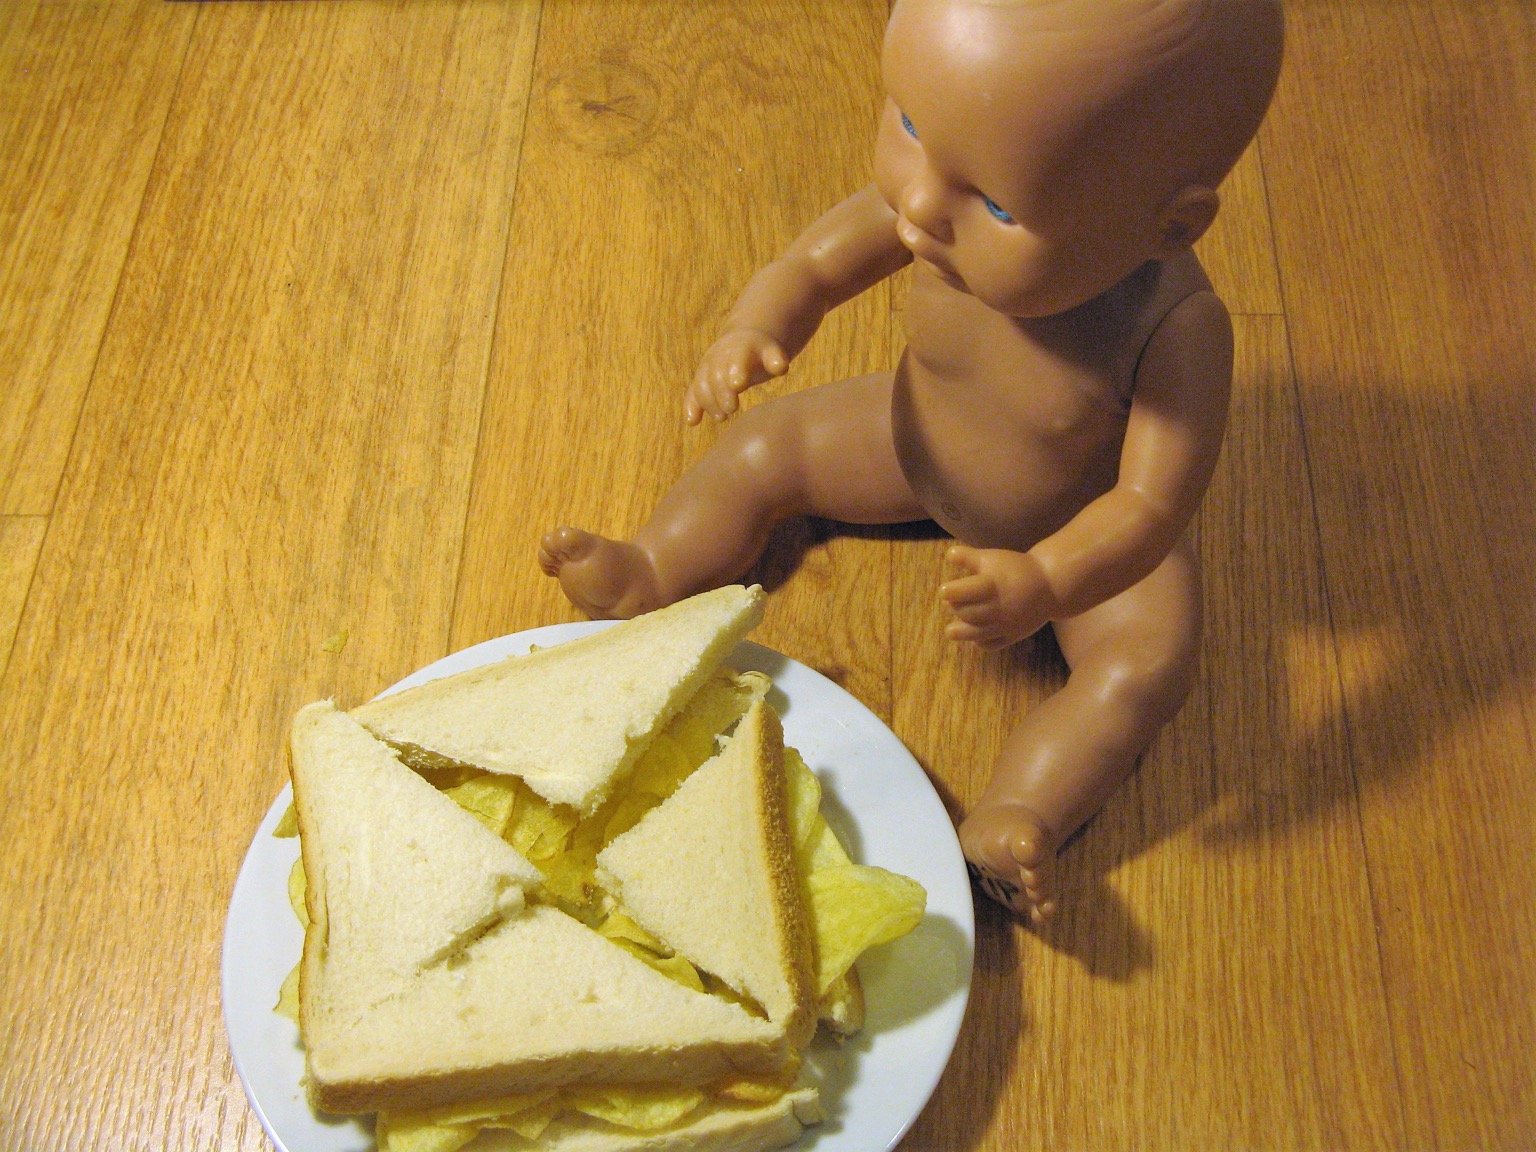 Quartered crisp sandwich alongside a doll